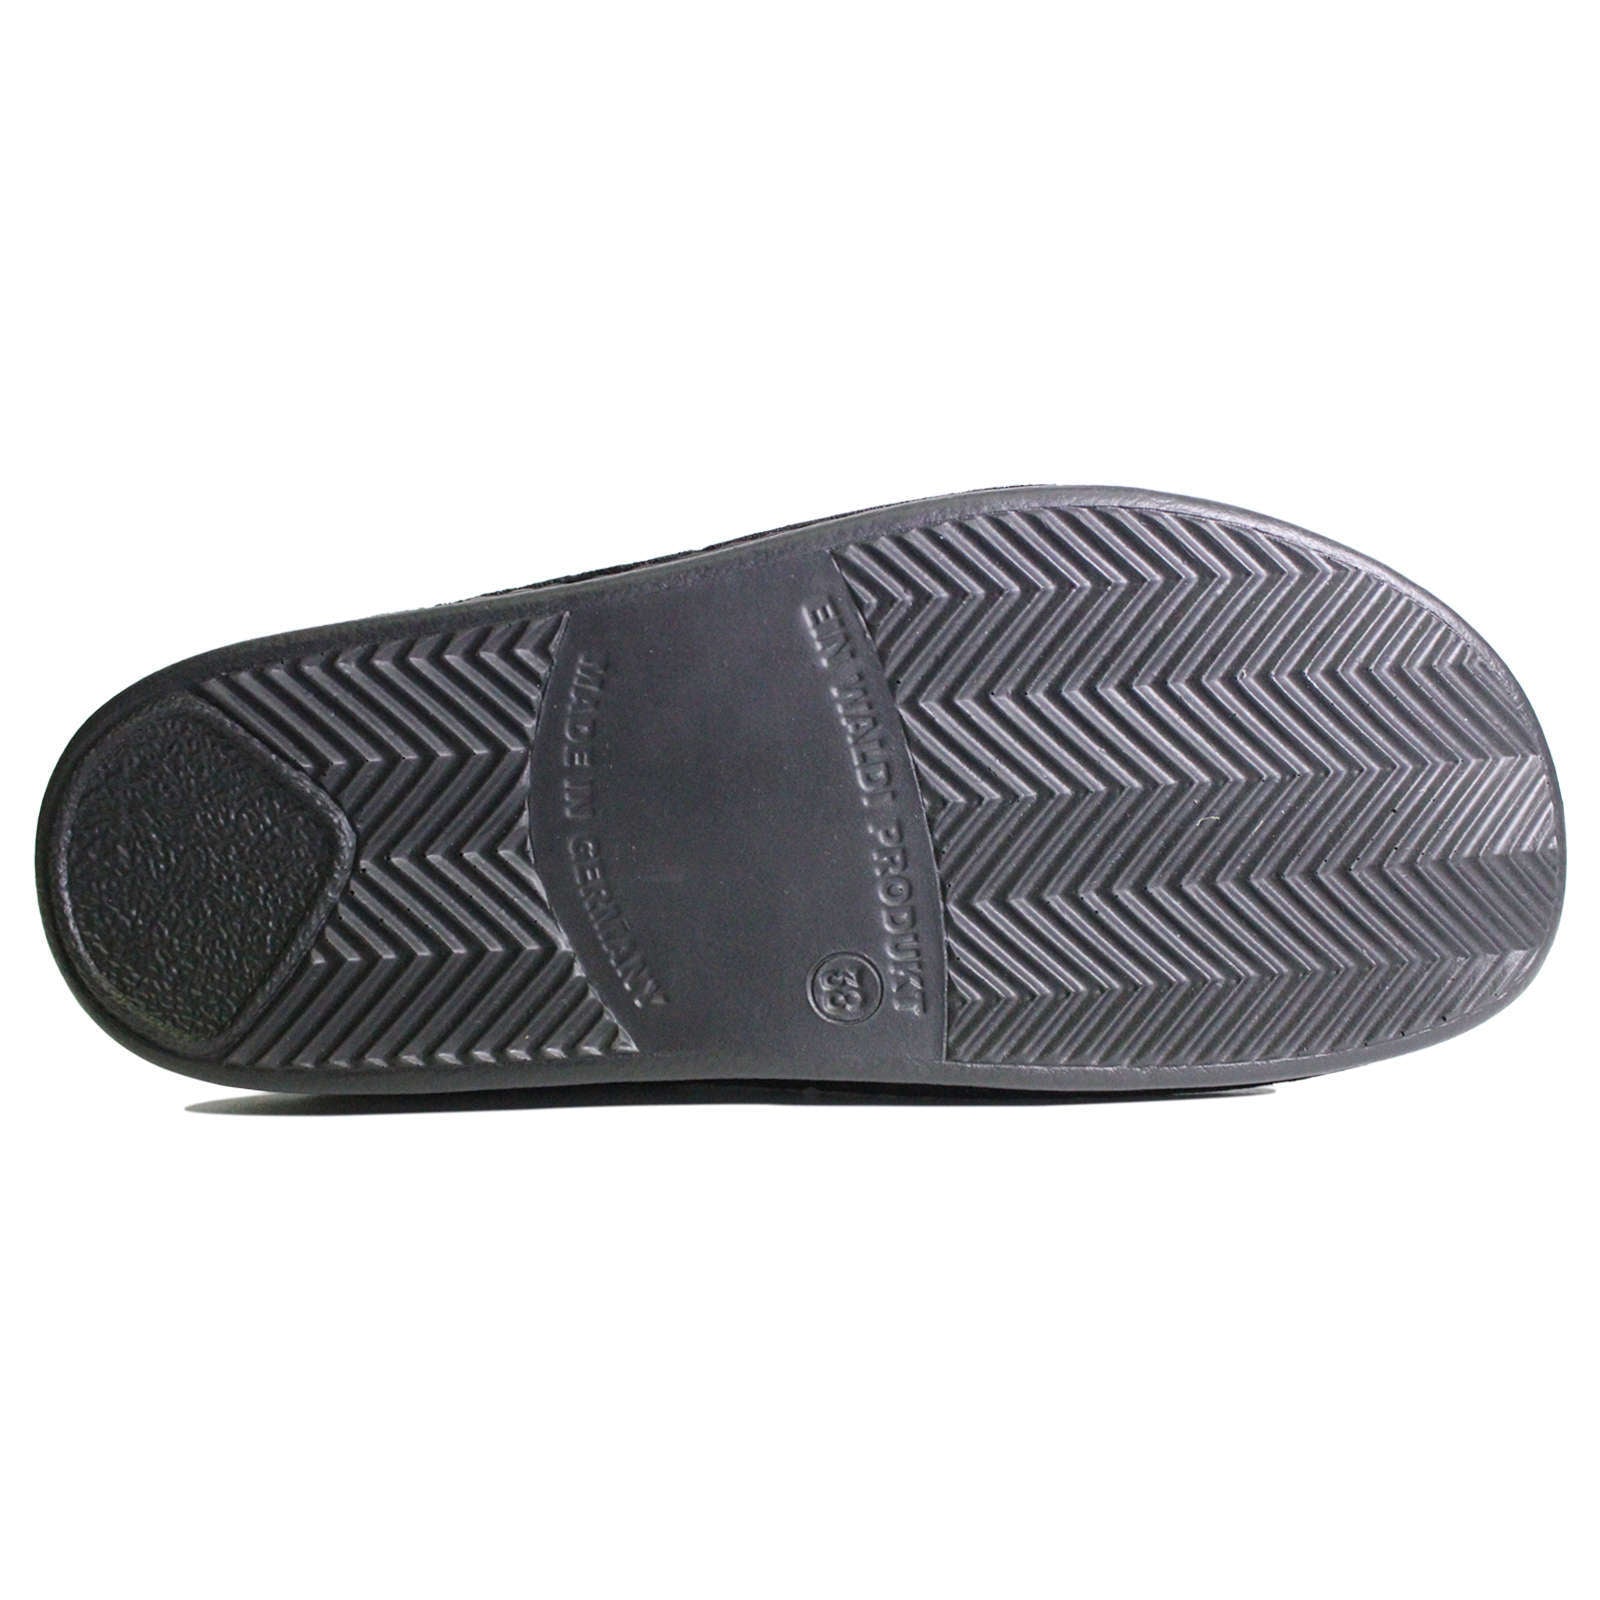 Finn Comfort Linz Suede Leather Unisex Ankle Shoes#color_black brown